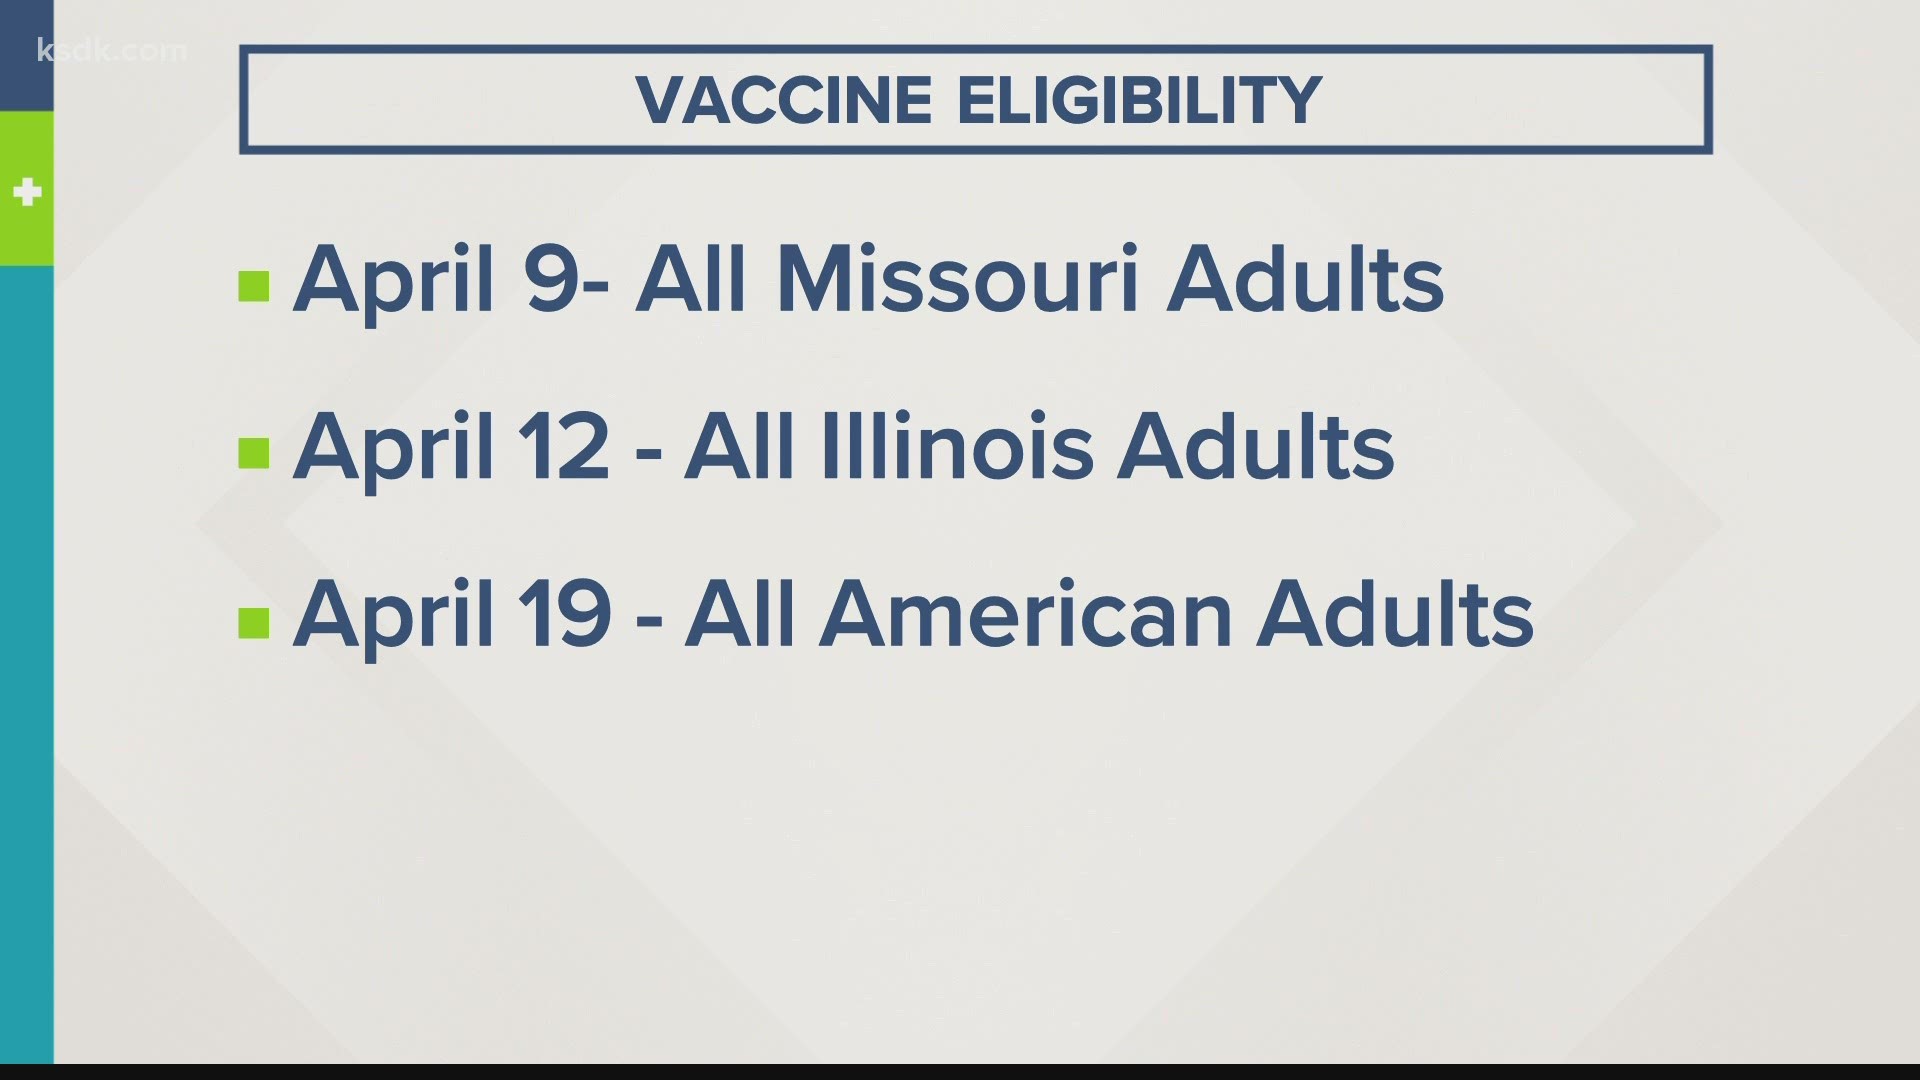 In Illinois, eligibility opens on April 12